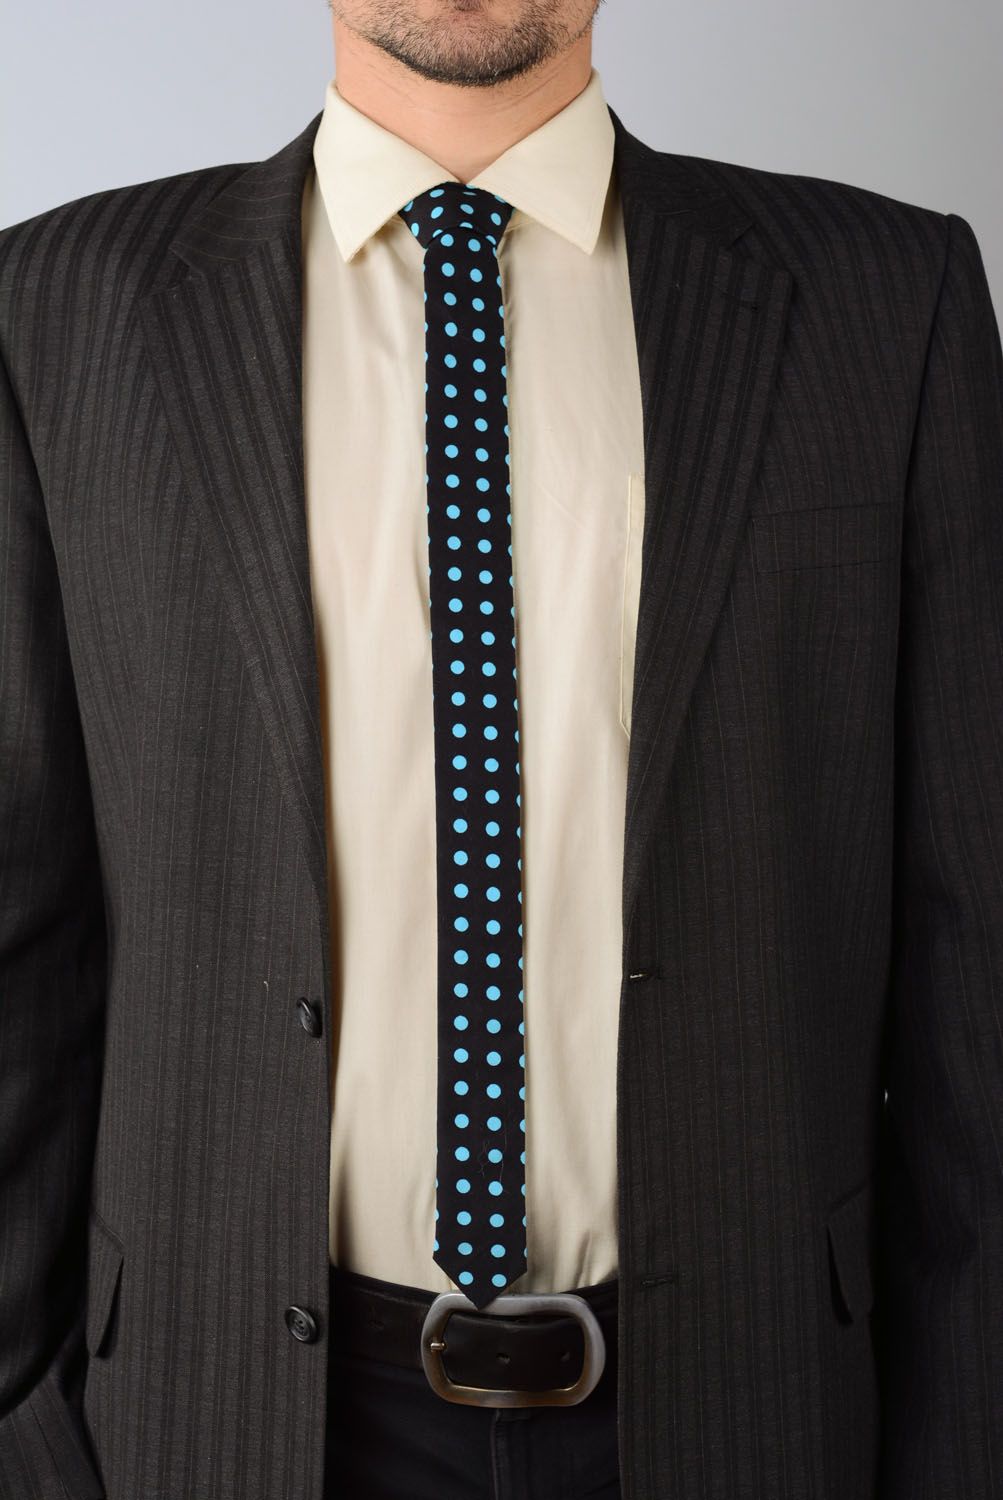 Cotton tie Black with Blue Dots photo 1